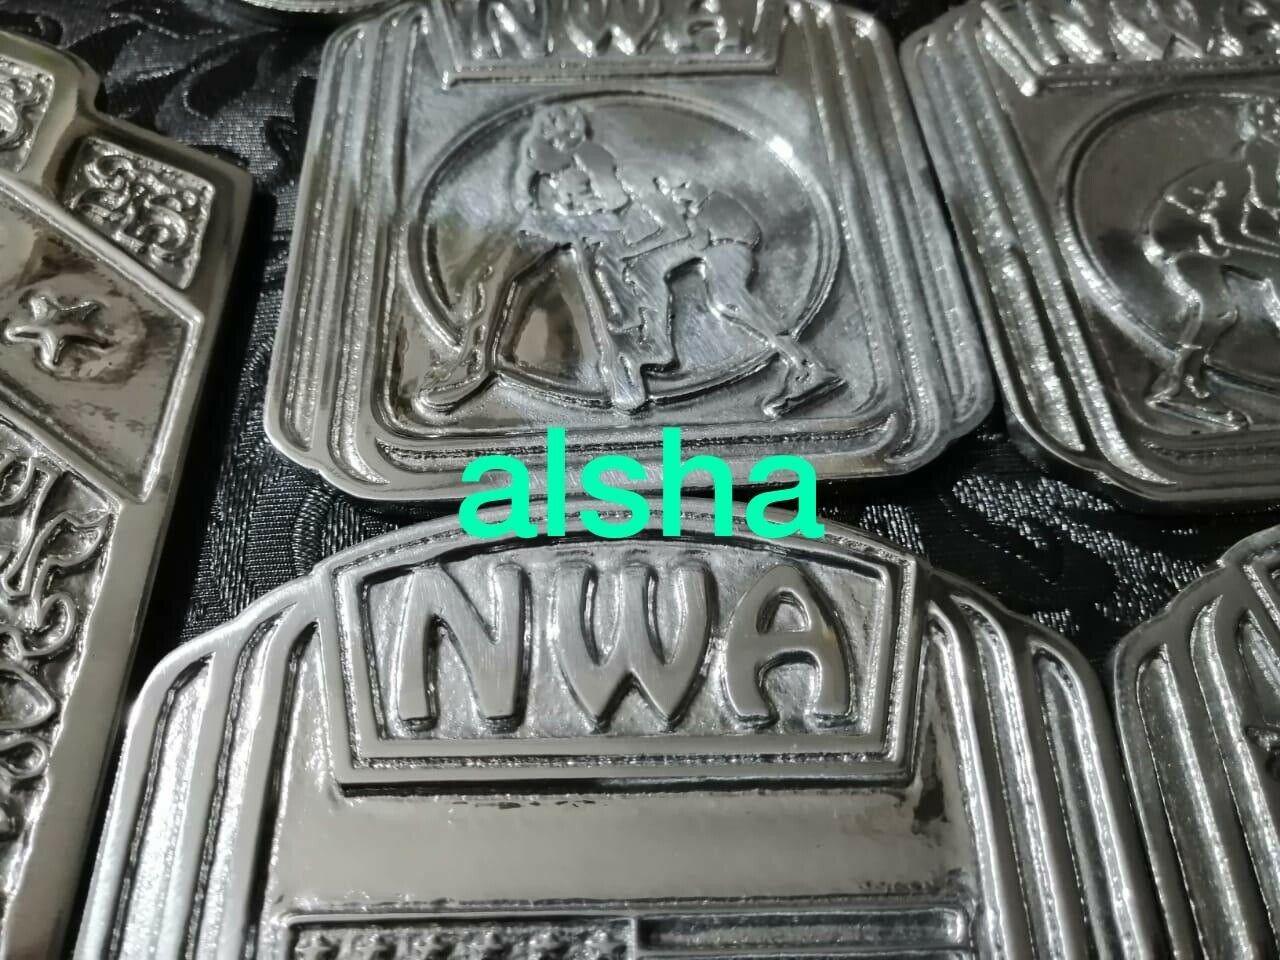 NWA NORTH AMERICAN HEAVYWEIGHT Zinc Championship Belt - Zees Belts